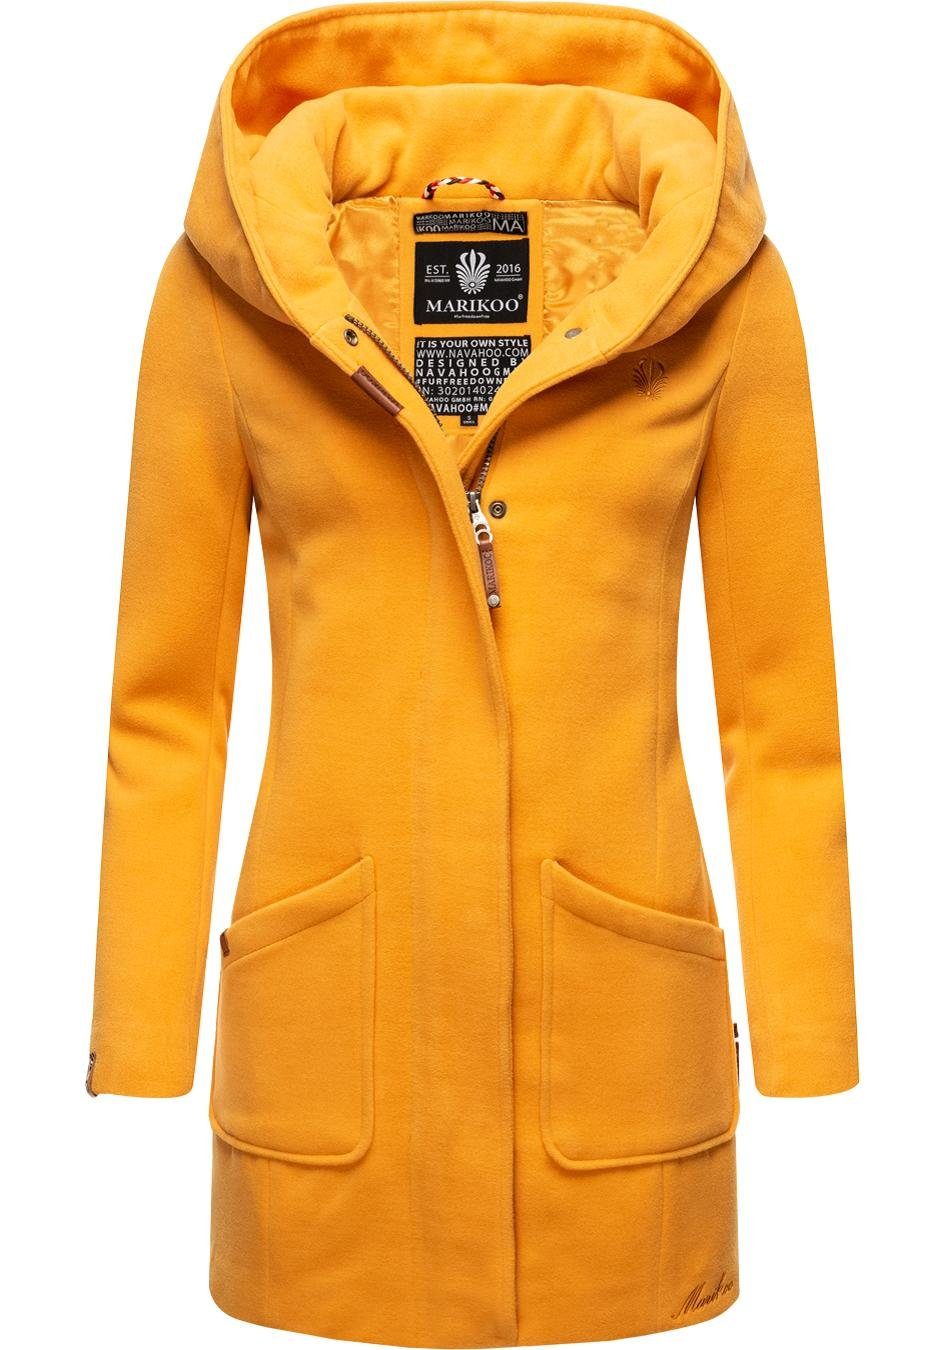 Marikoo Wintermantel Maikoo hochwertiger Mantel mit großer Kapuze gelb